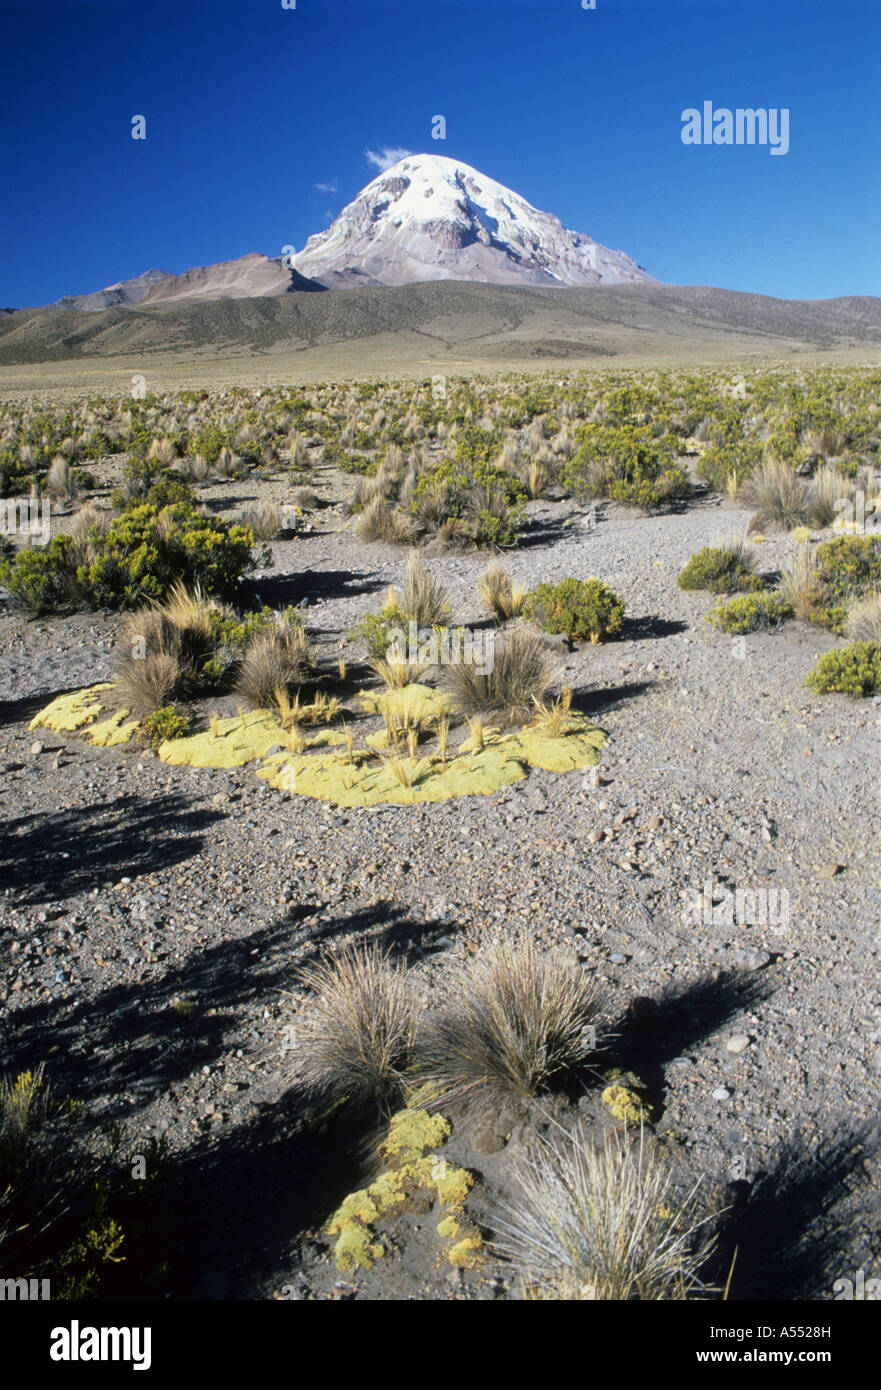 Sajama volcano and high altitude altiplano puna desert with tola bushes  (Parastrephia lepidophylla), Bolivia Stock Photo - Alamy